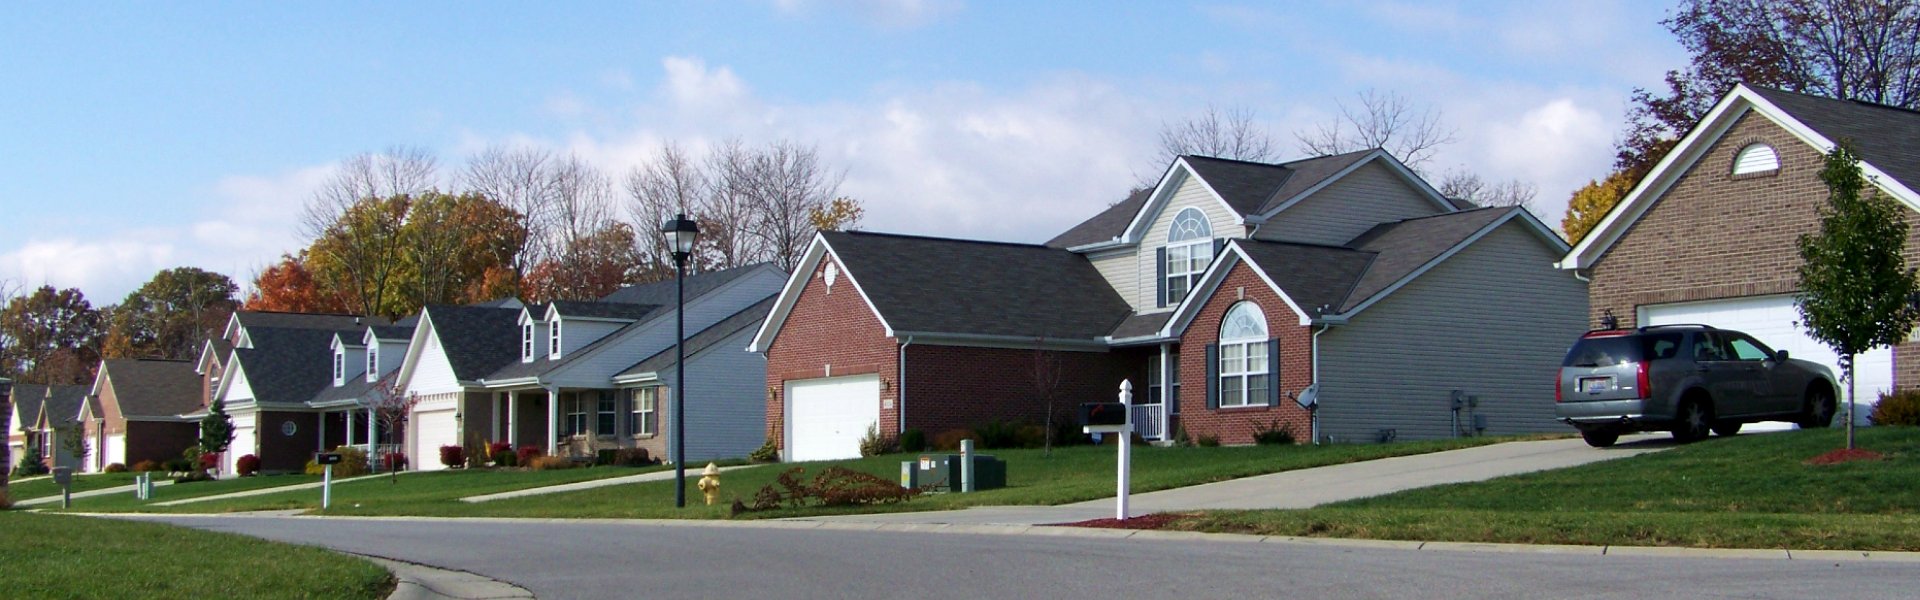 houses in a neighborhood